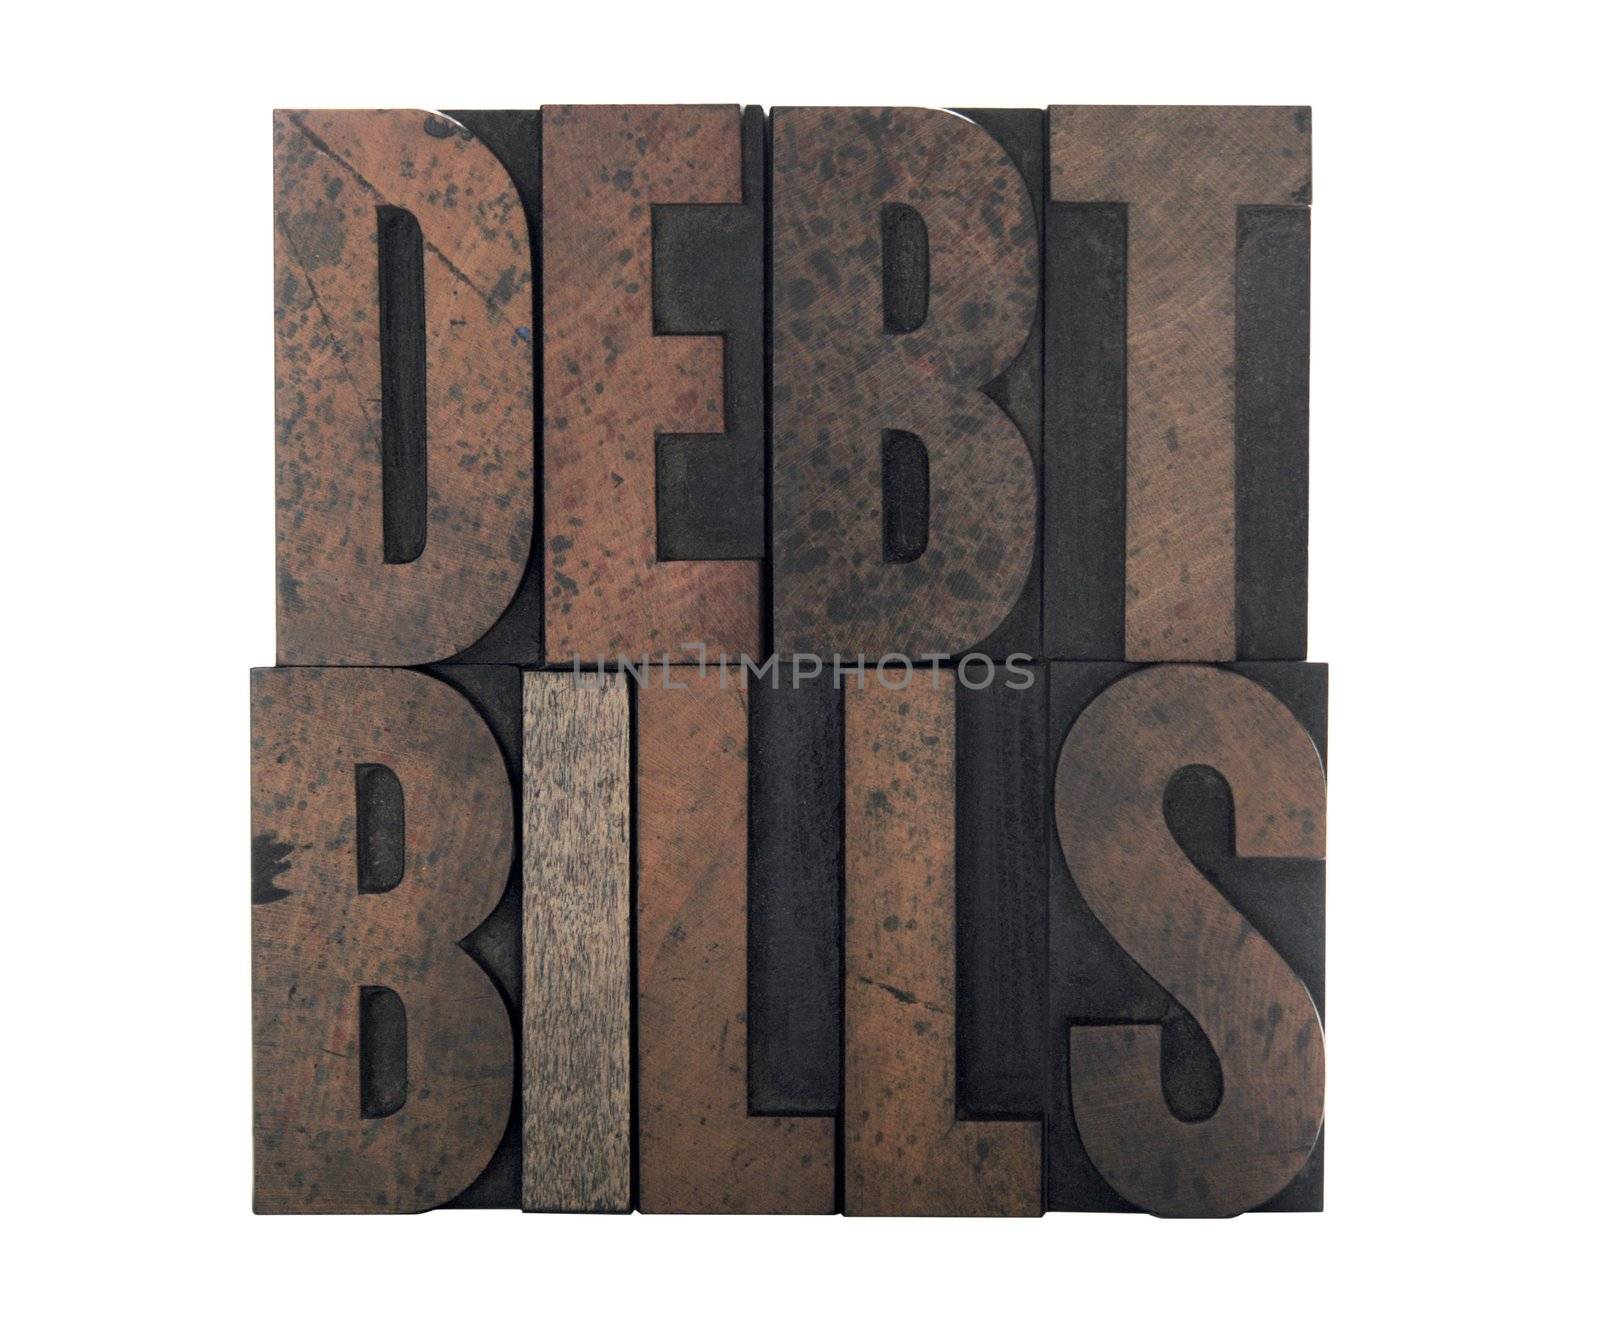 debt bills by nebari